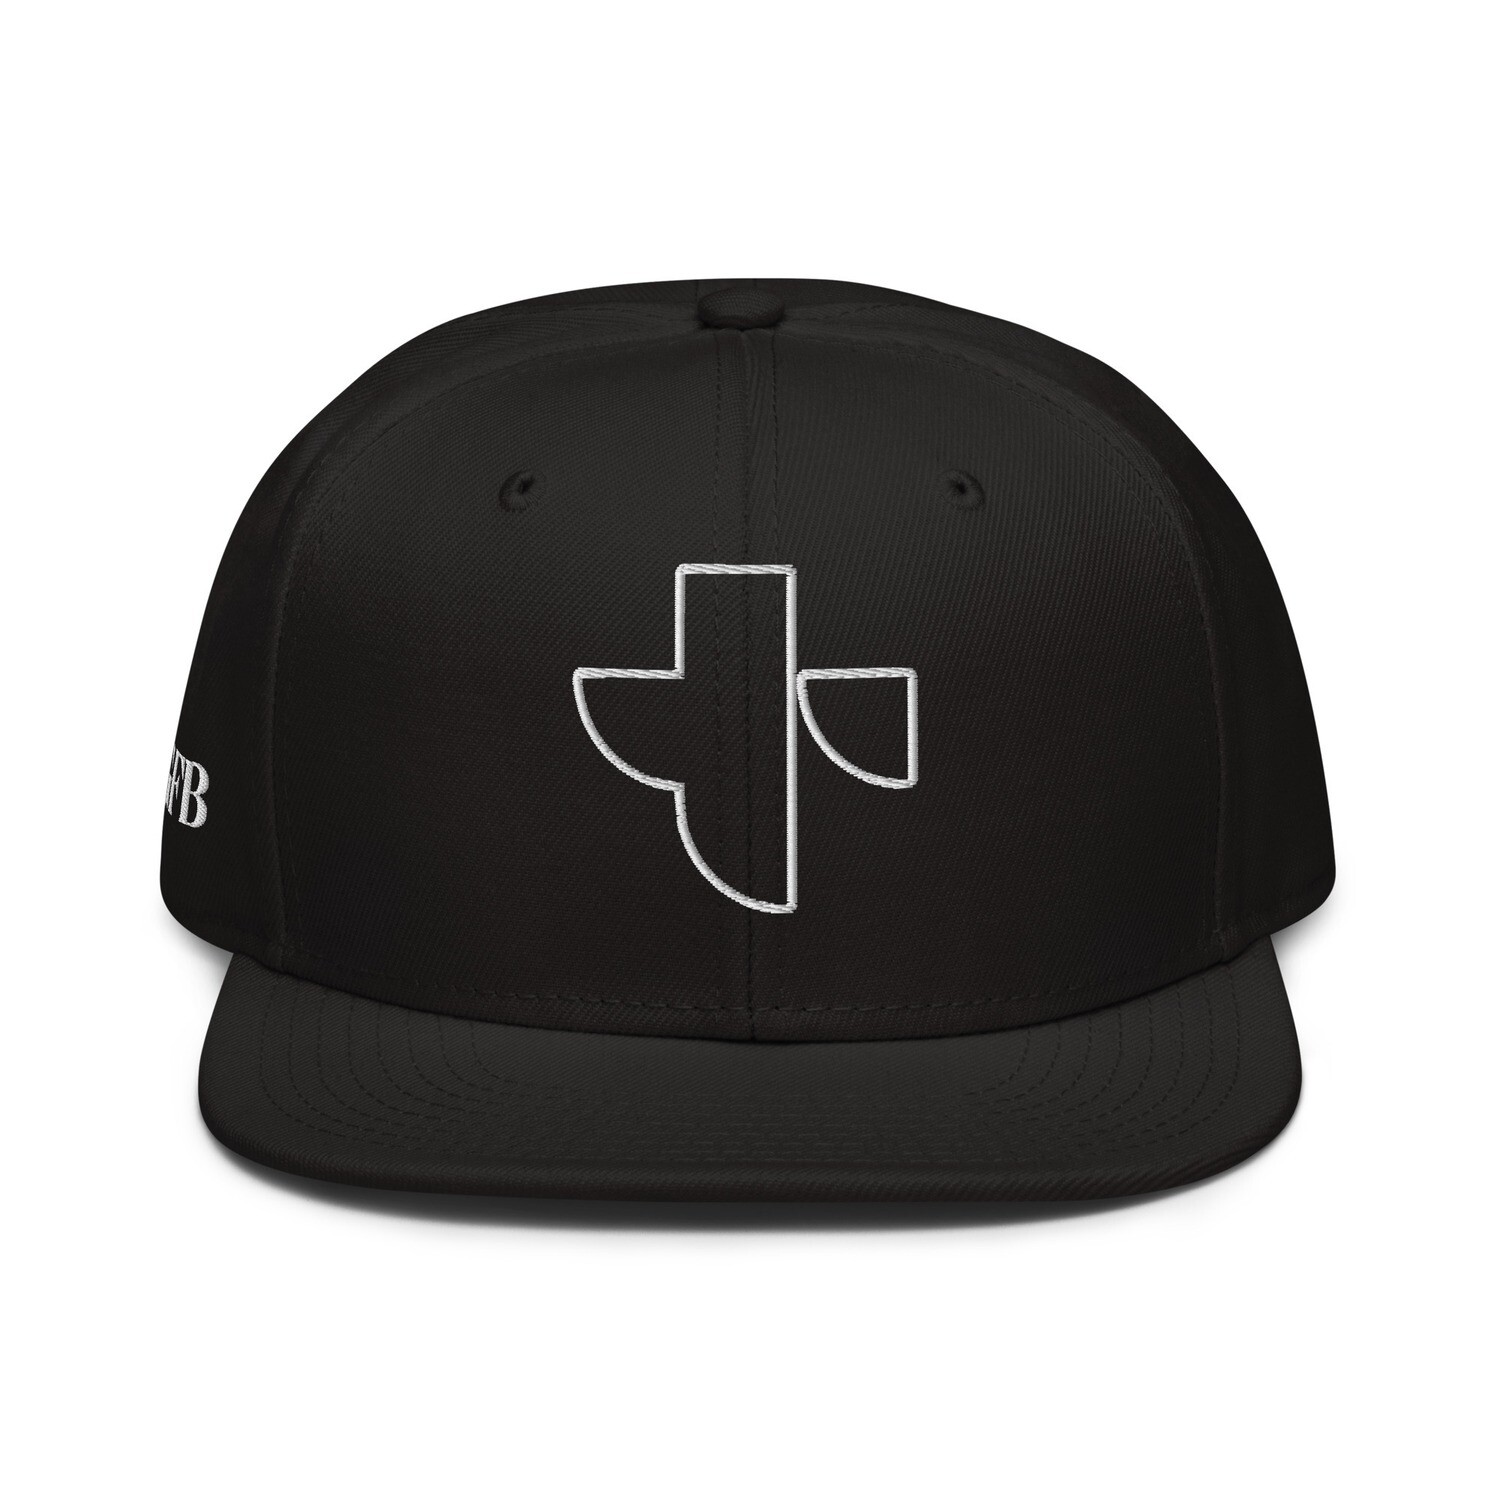 TGFB Snapback Hat